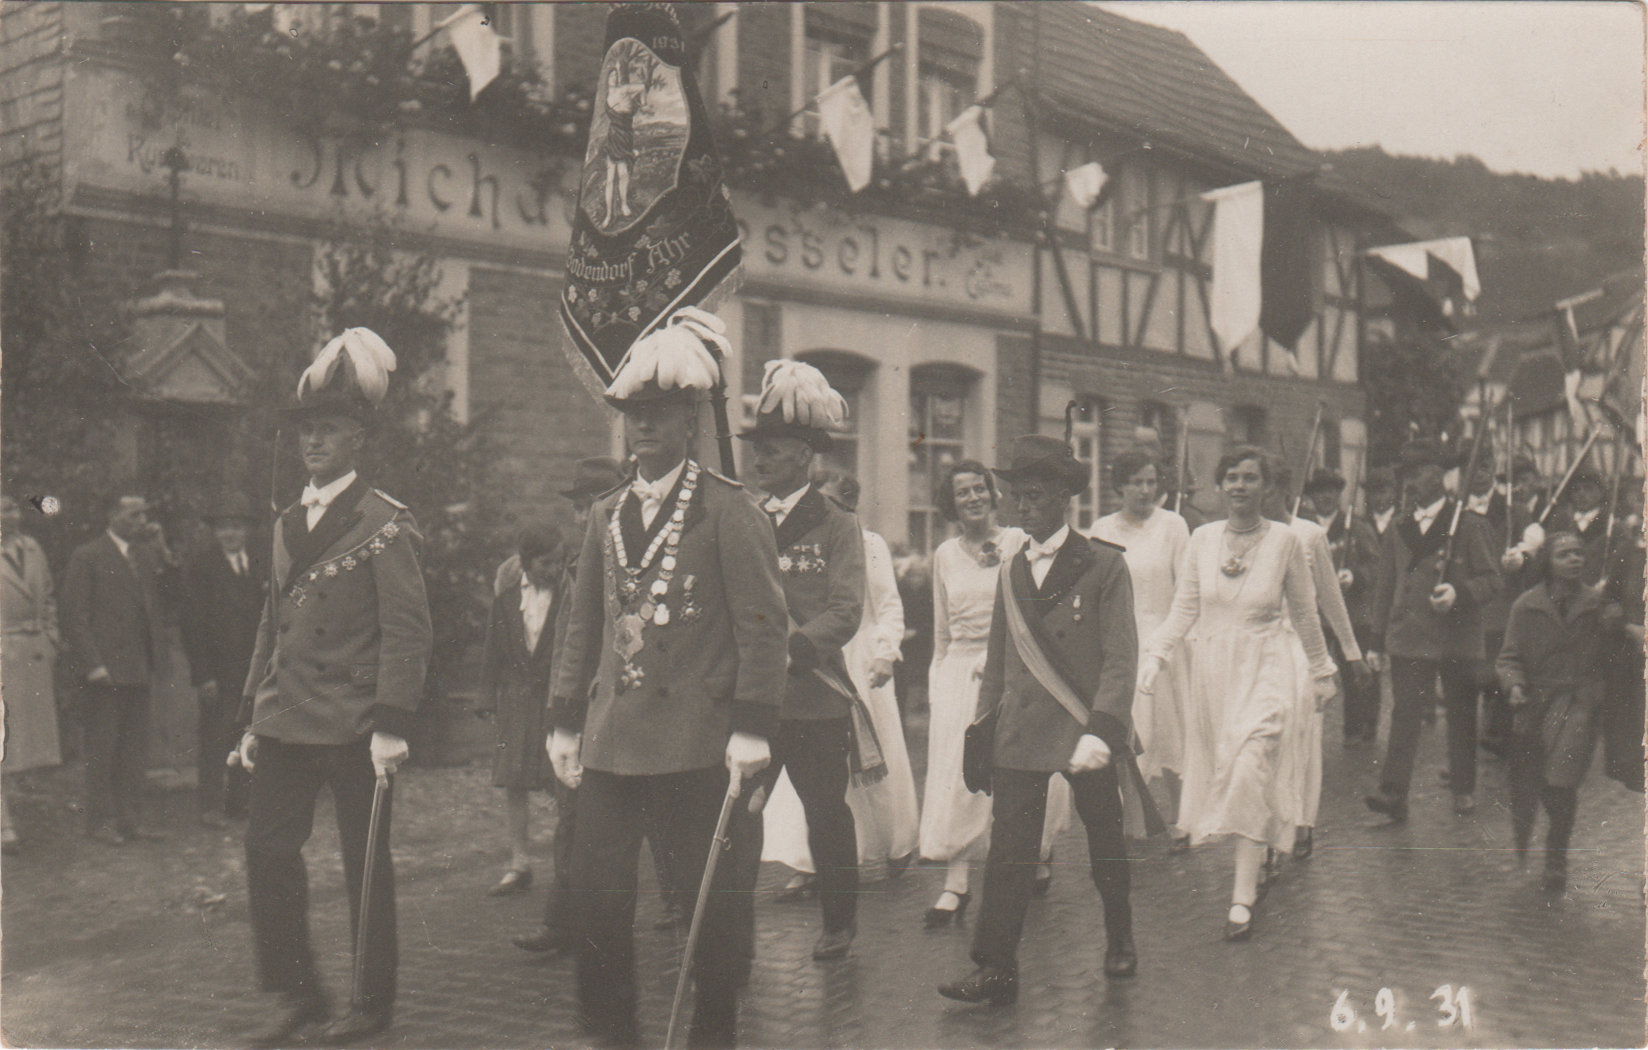 Umzug der St. Sebastianus-Schützengesellschaft Bad Bodendorf 1927 e.V. am 06.09.1931 (Heimatmuseum und -Archiv Bad Bodendorf CC BY-NC-SA)